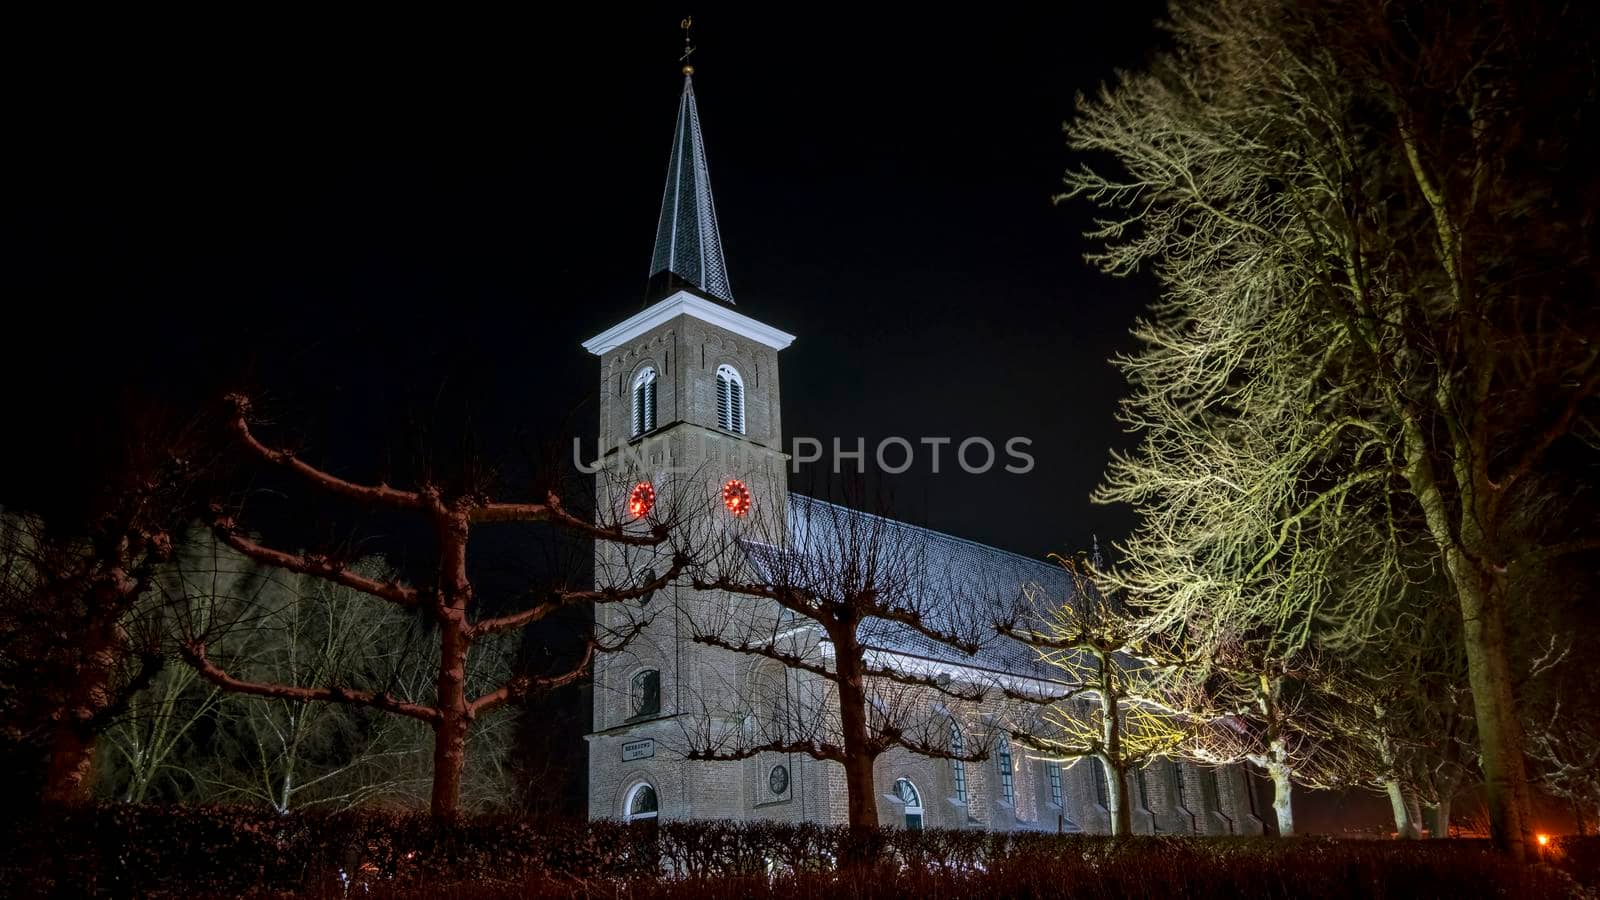 Snowy medieval church in Ternaard Friesland in the Netherlands at night by devy